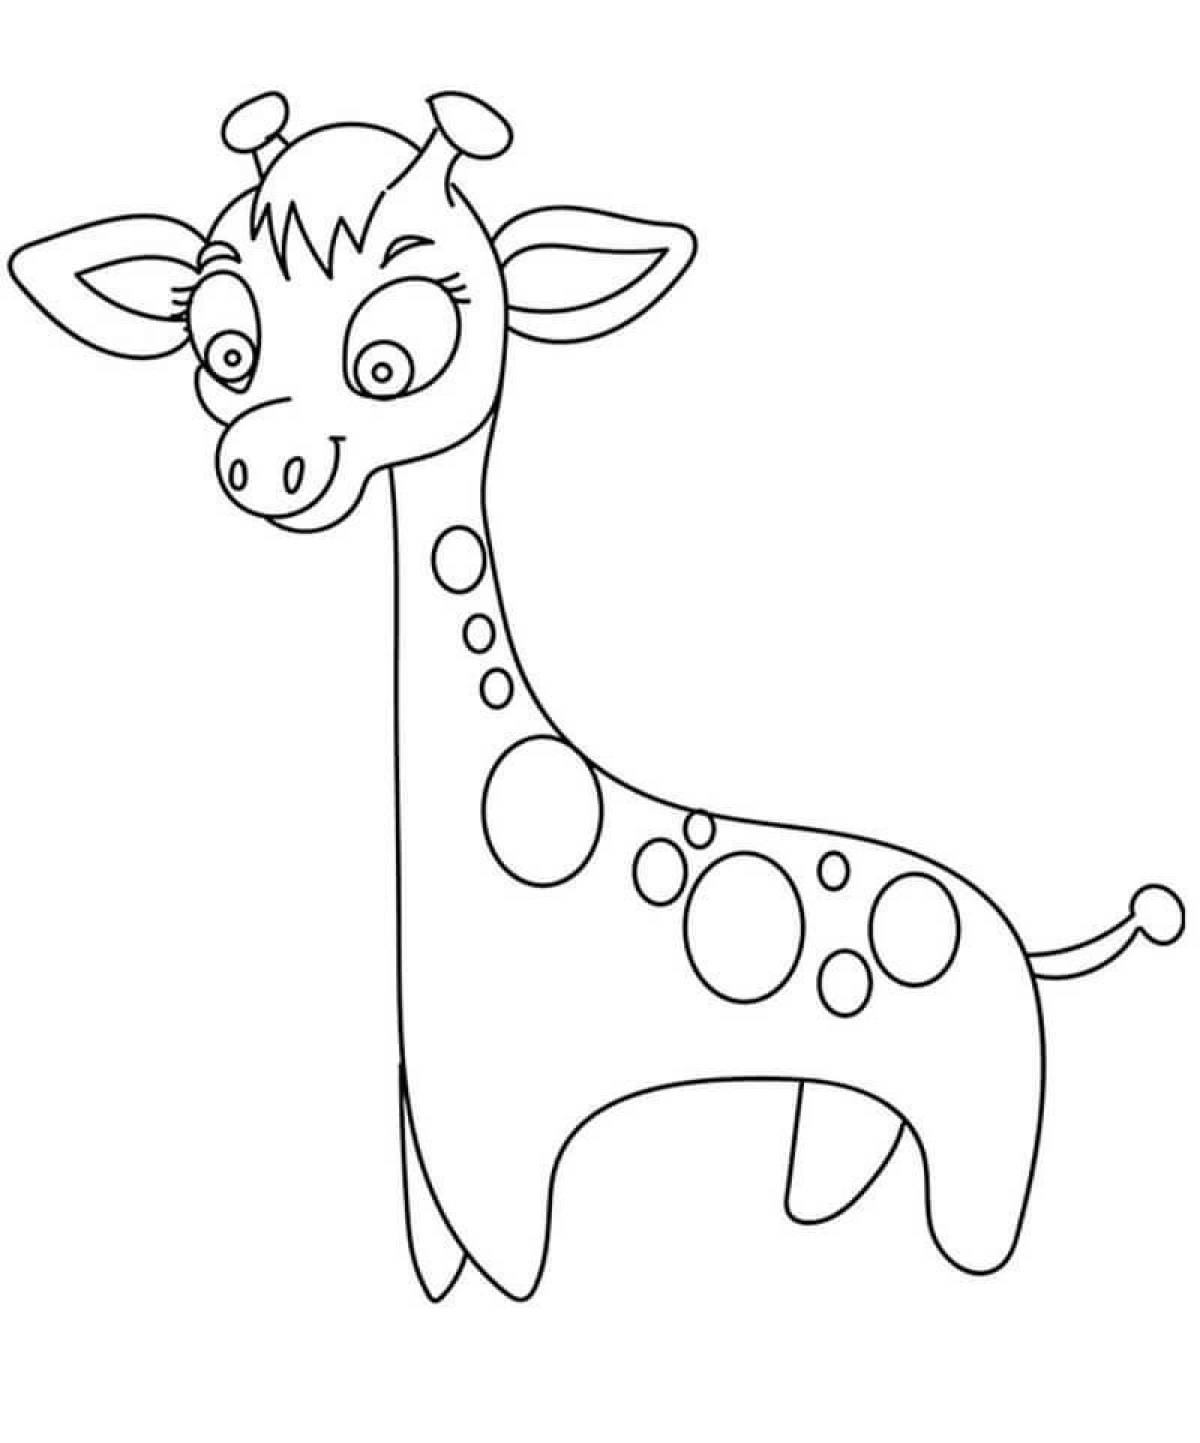 Coloring page cheerful giraffe